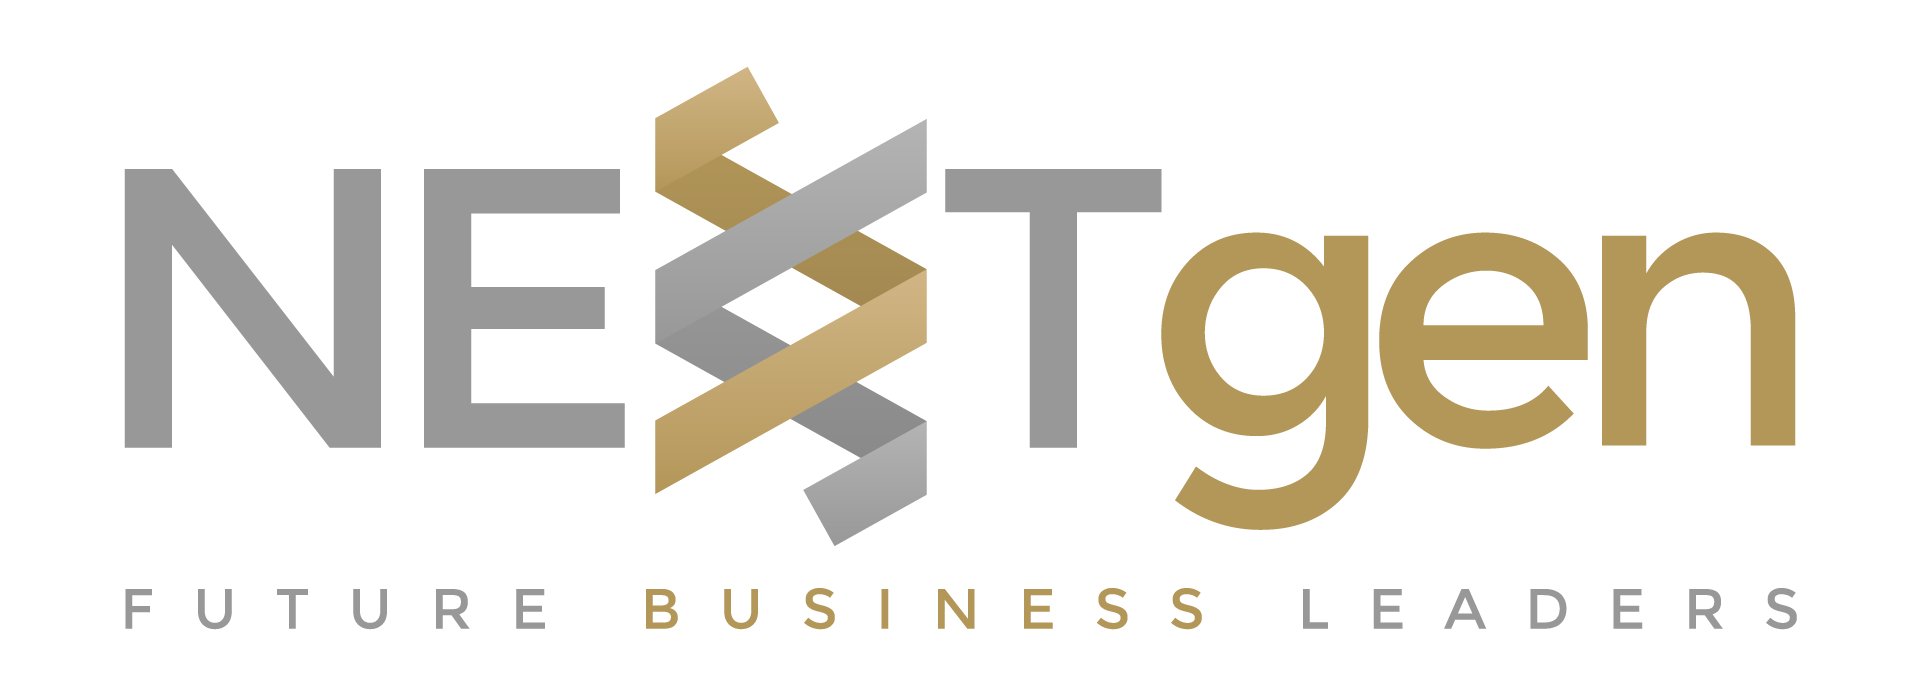 SEN NEXTgen Future Business Leaders logo